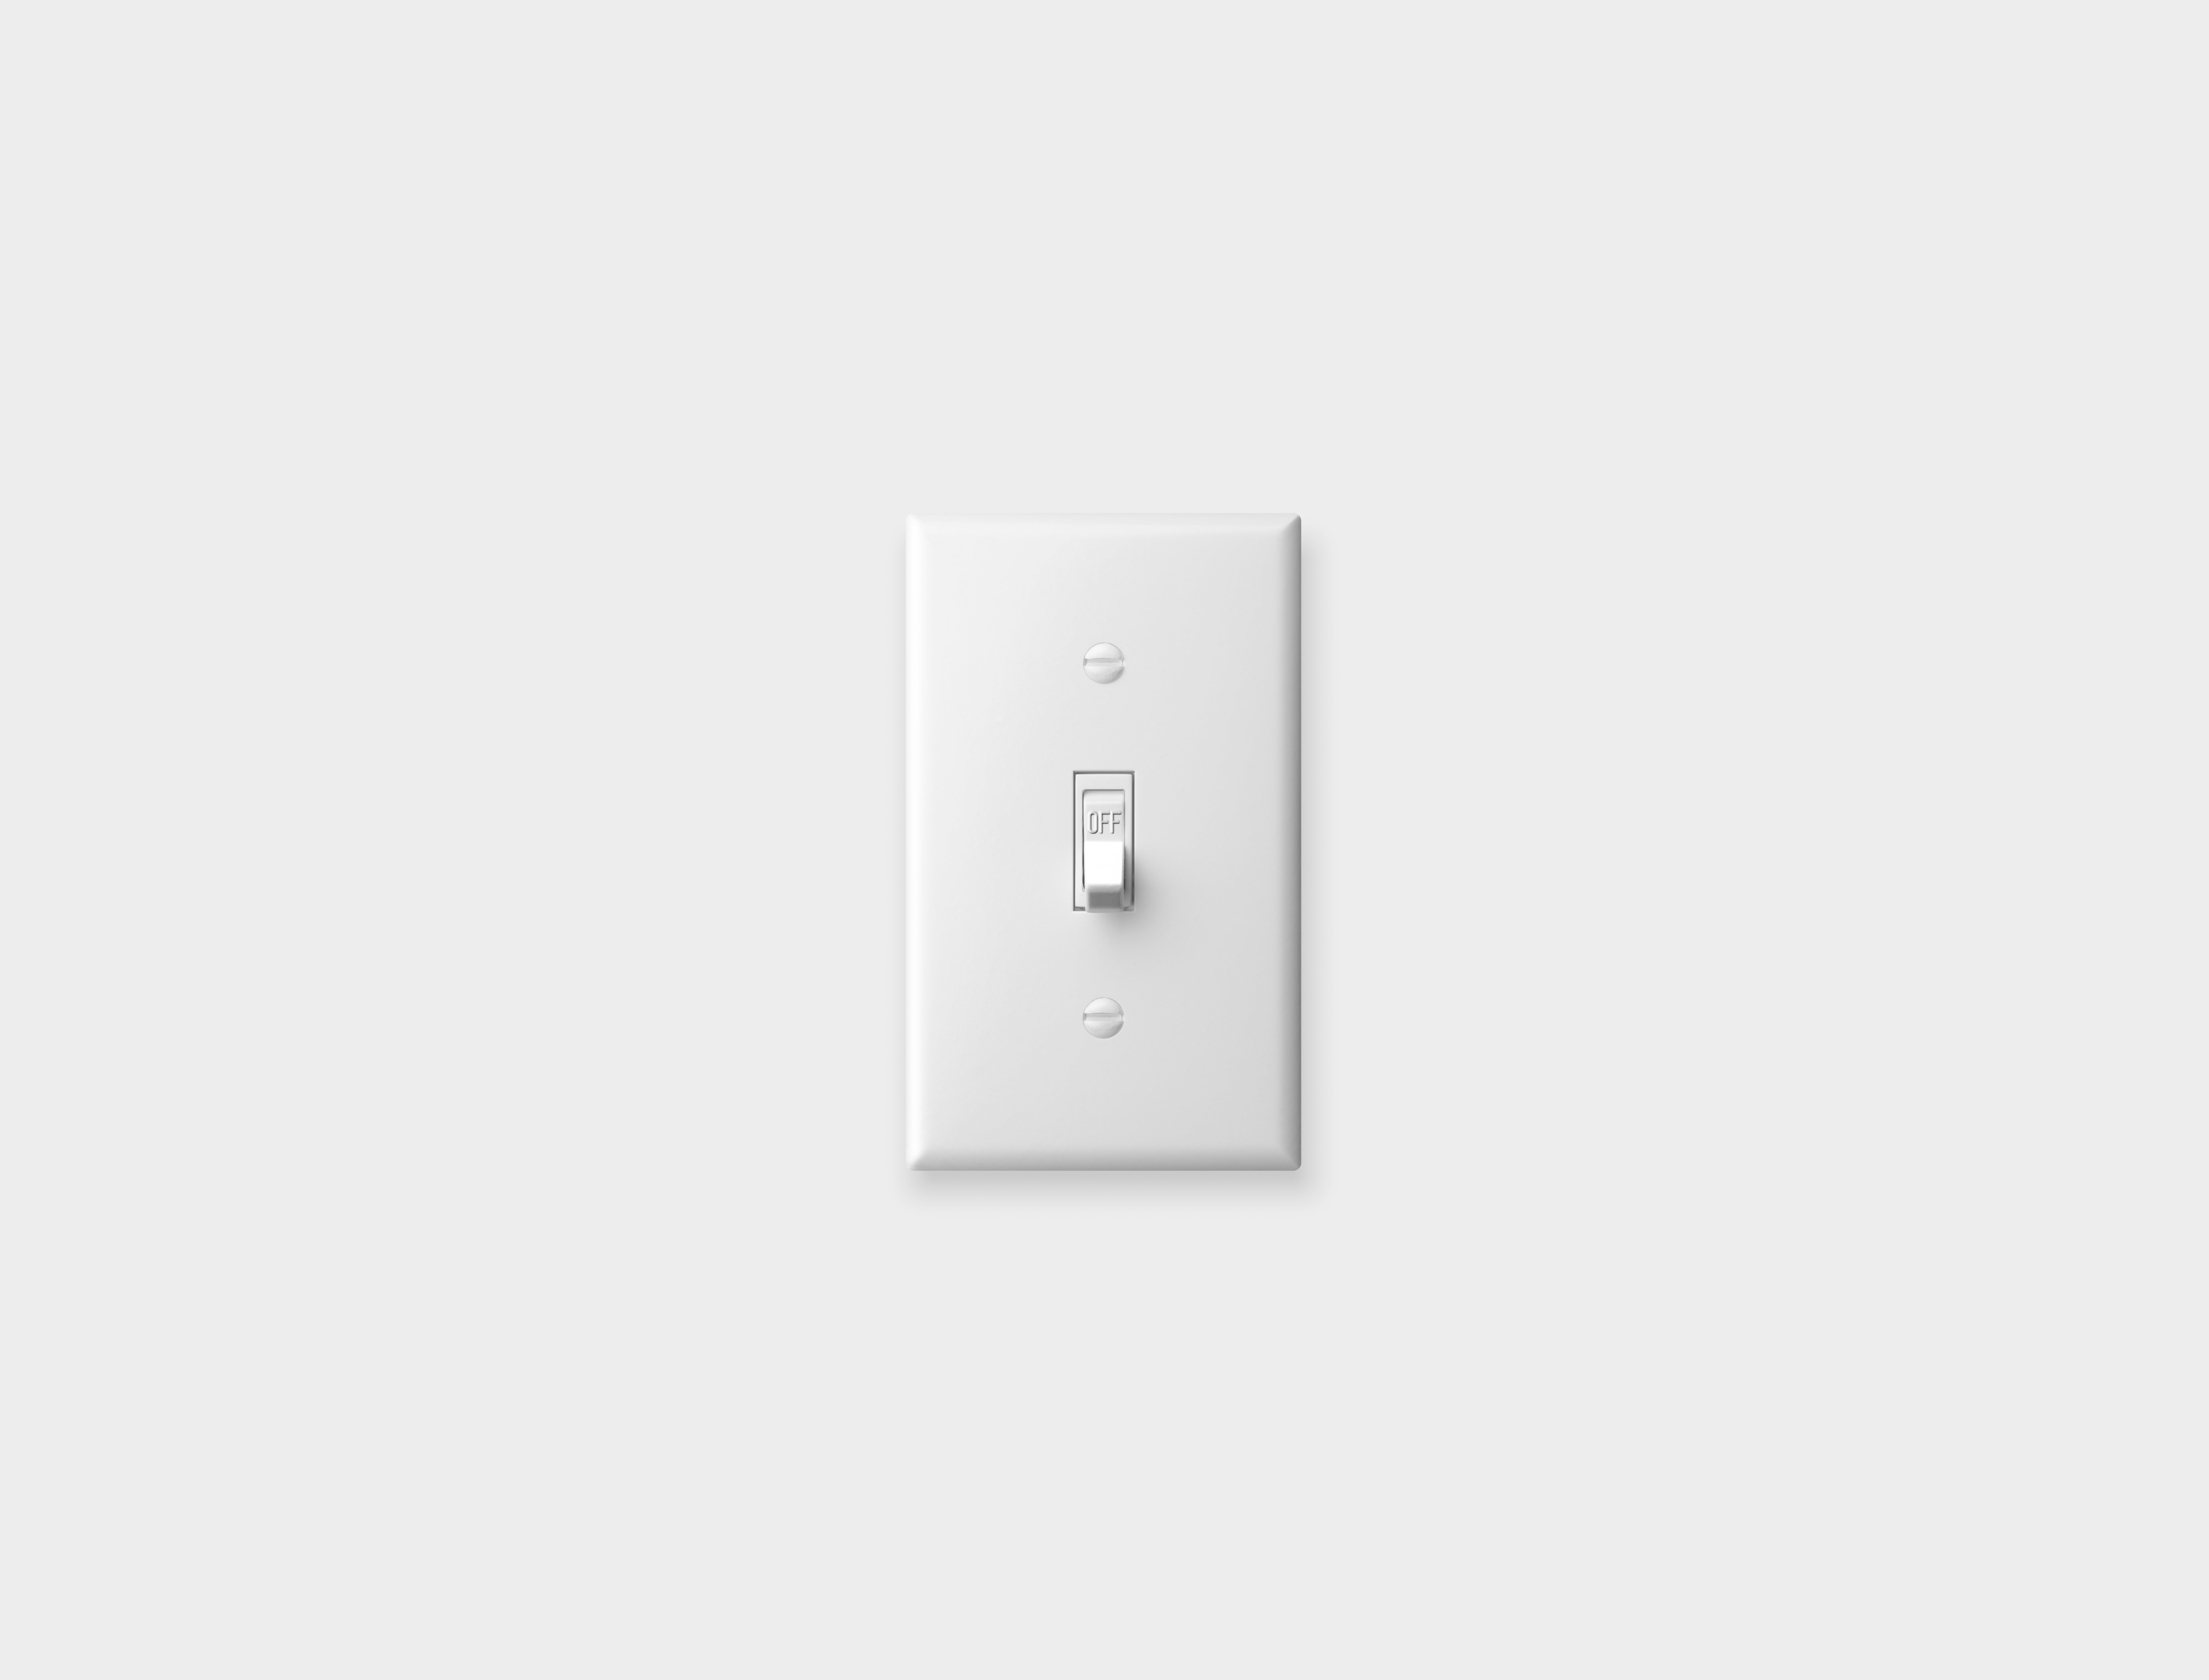 a light switch